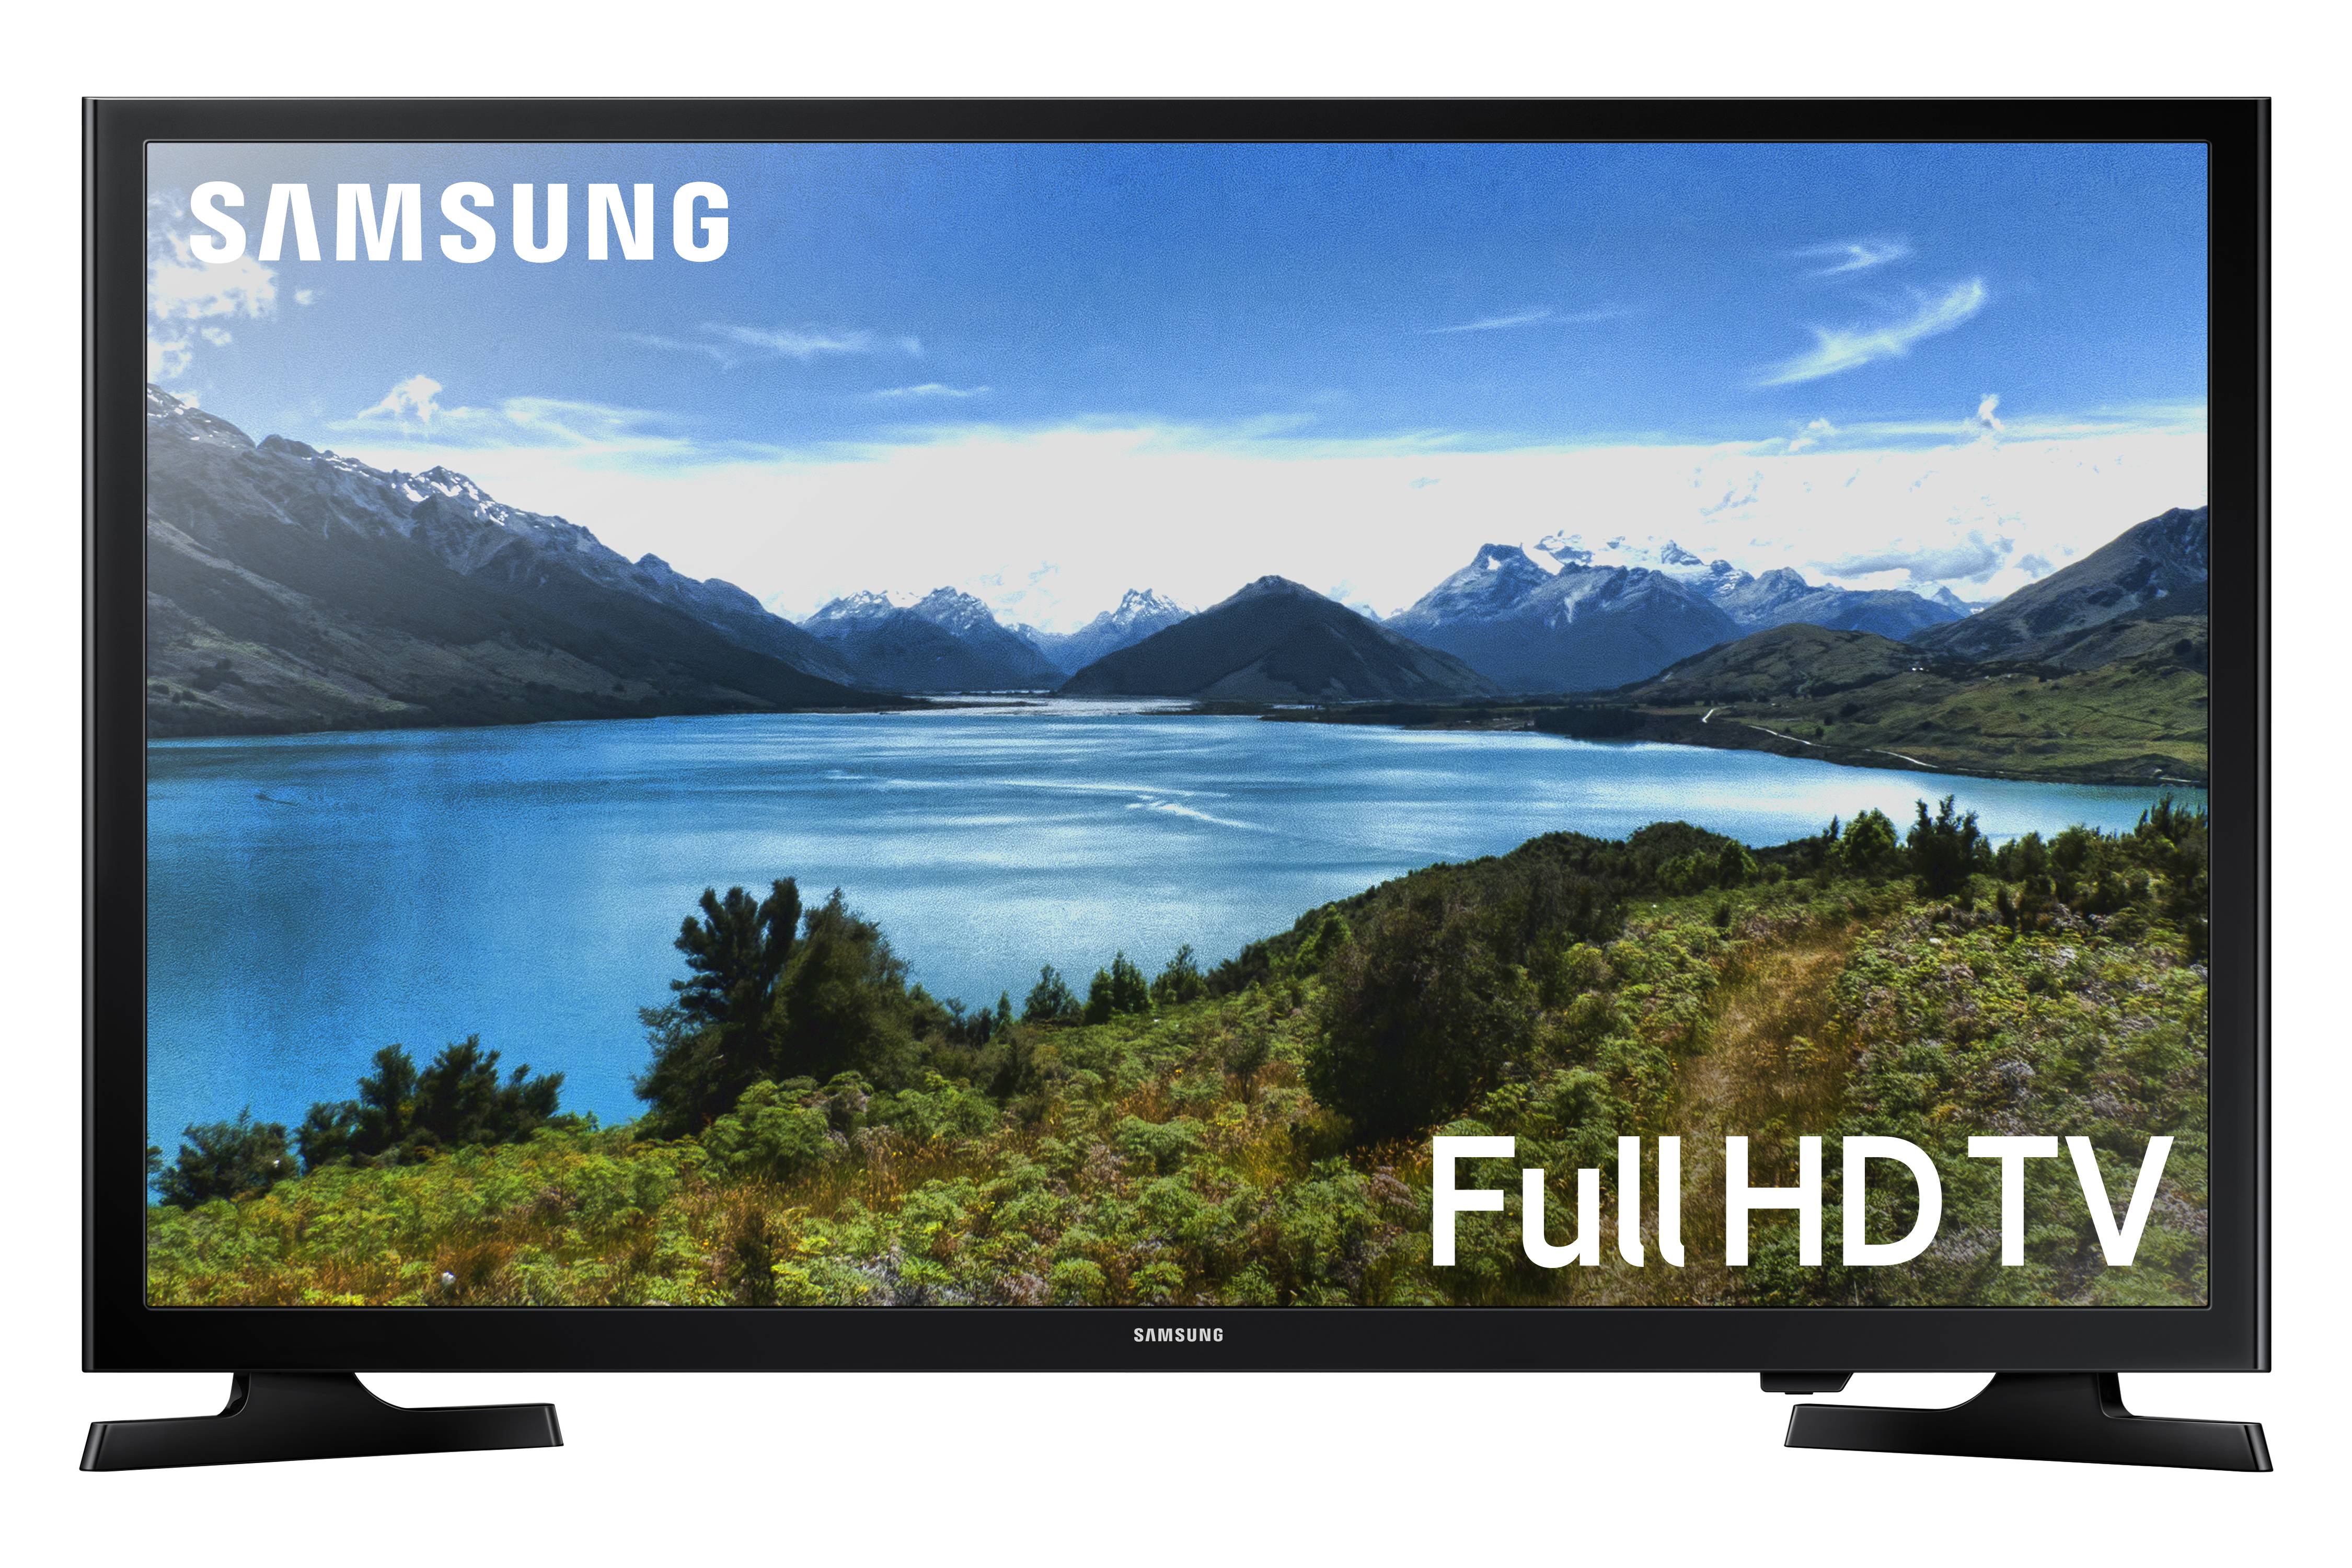 SAMSUNG 32" Class HD (720P) LED TV UN32J4000 - image 1 of 9